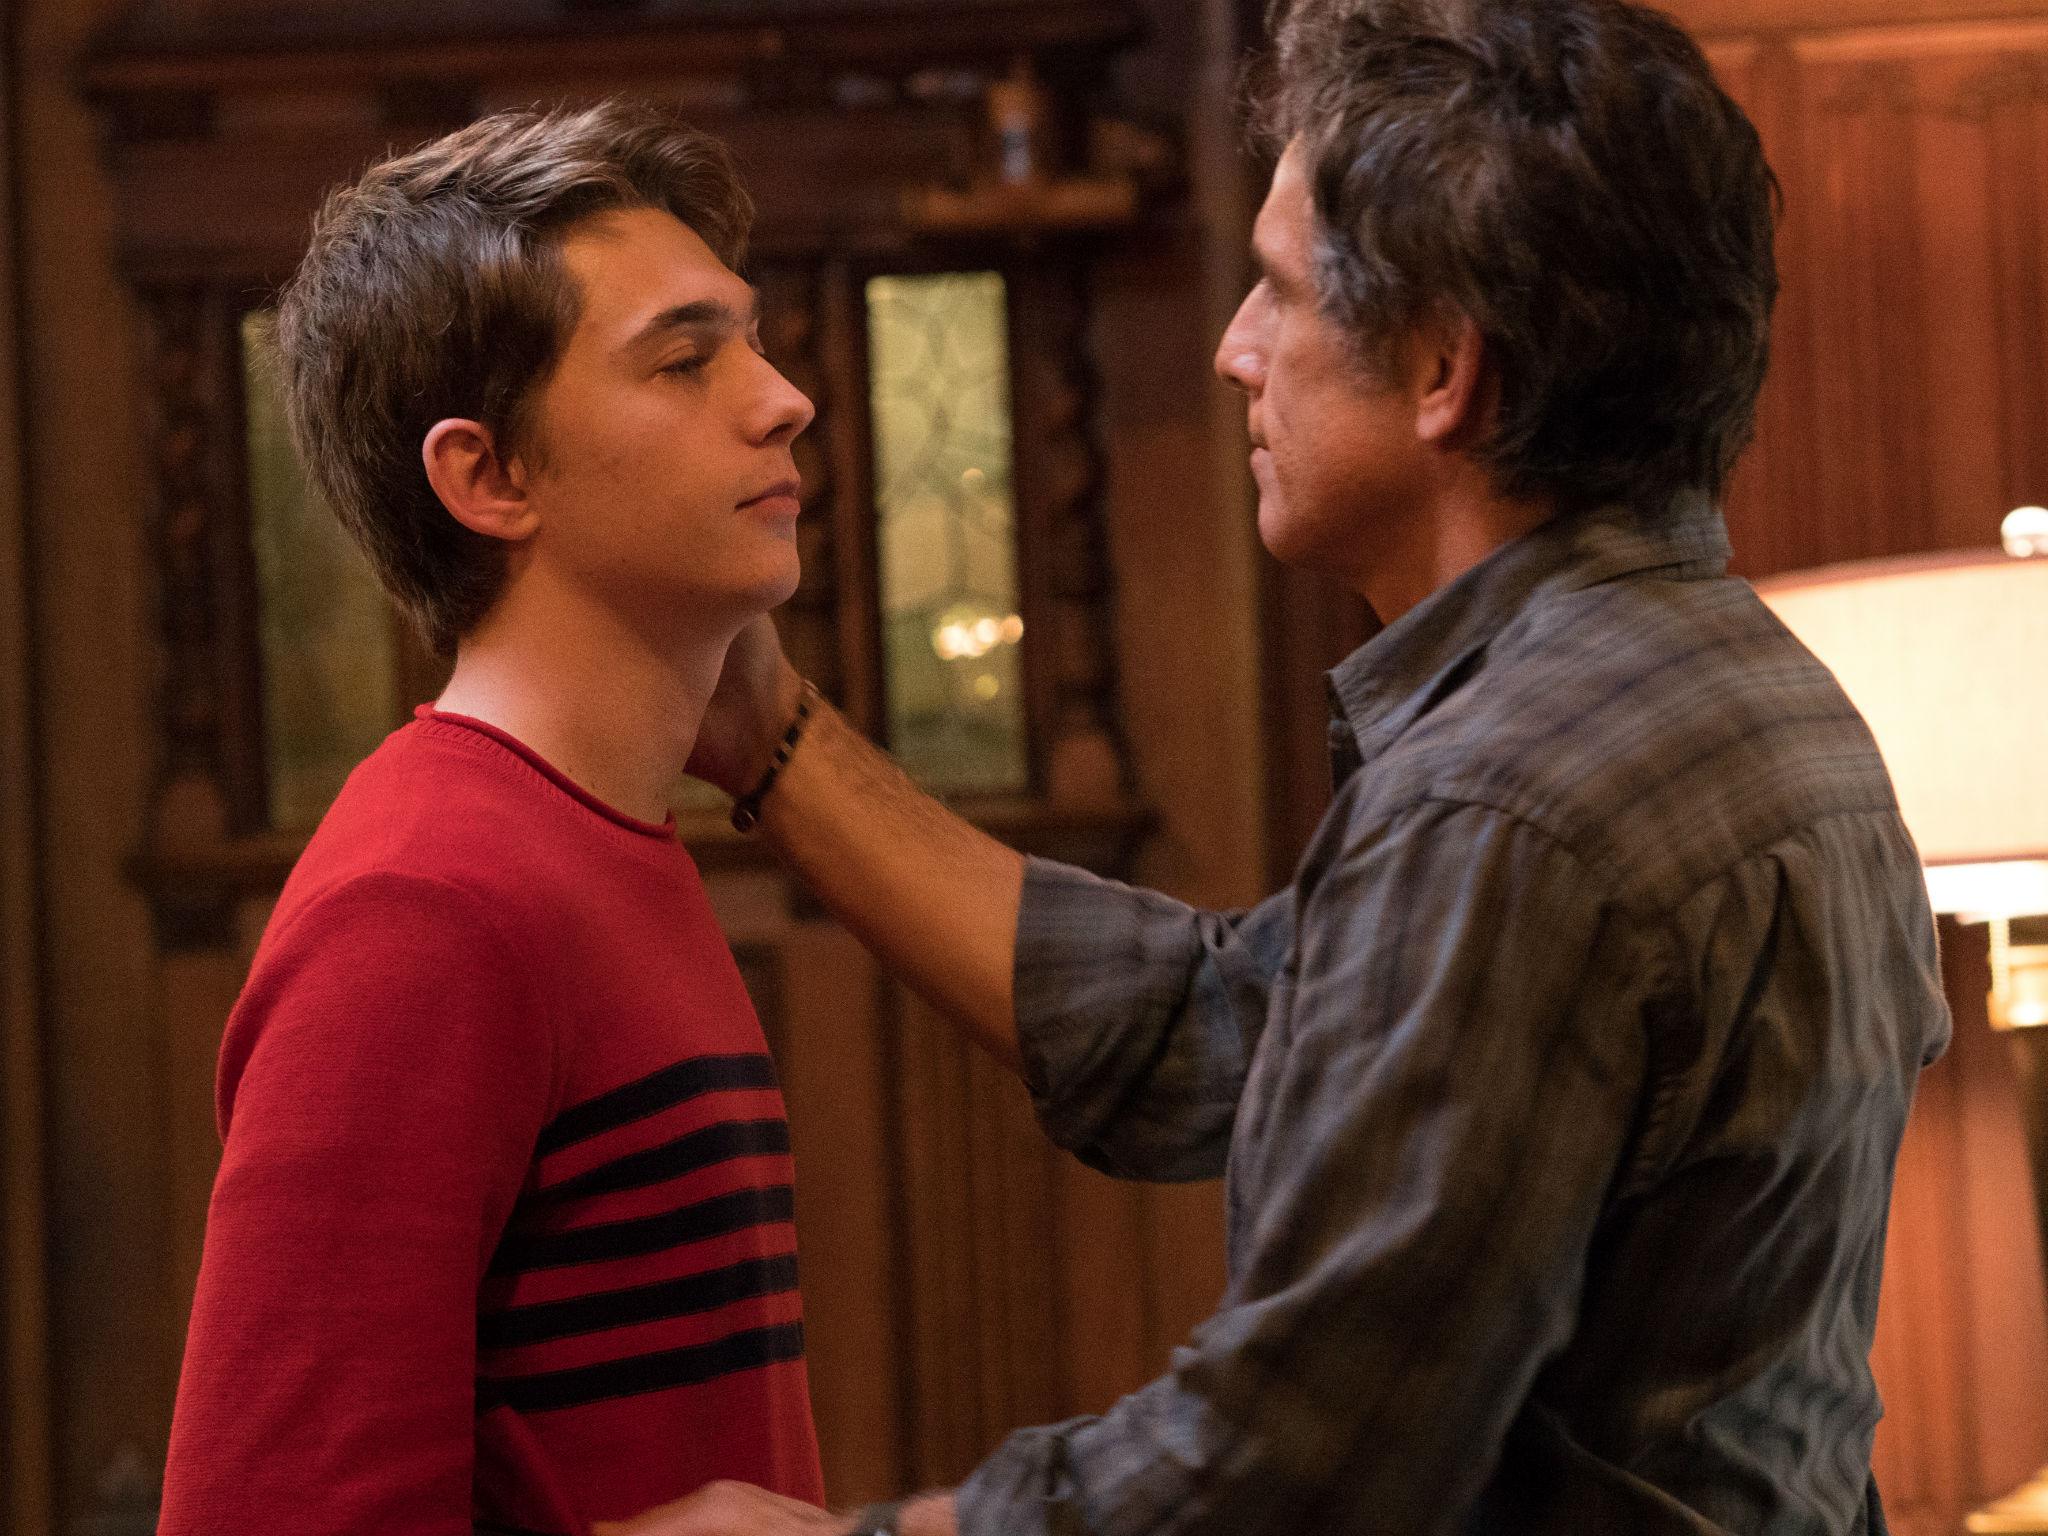 Ben Stiller (right) as Brad Sloan with Austin Abrams (left) as his son Troy Sloan in ‘Brad’s Status’